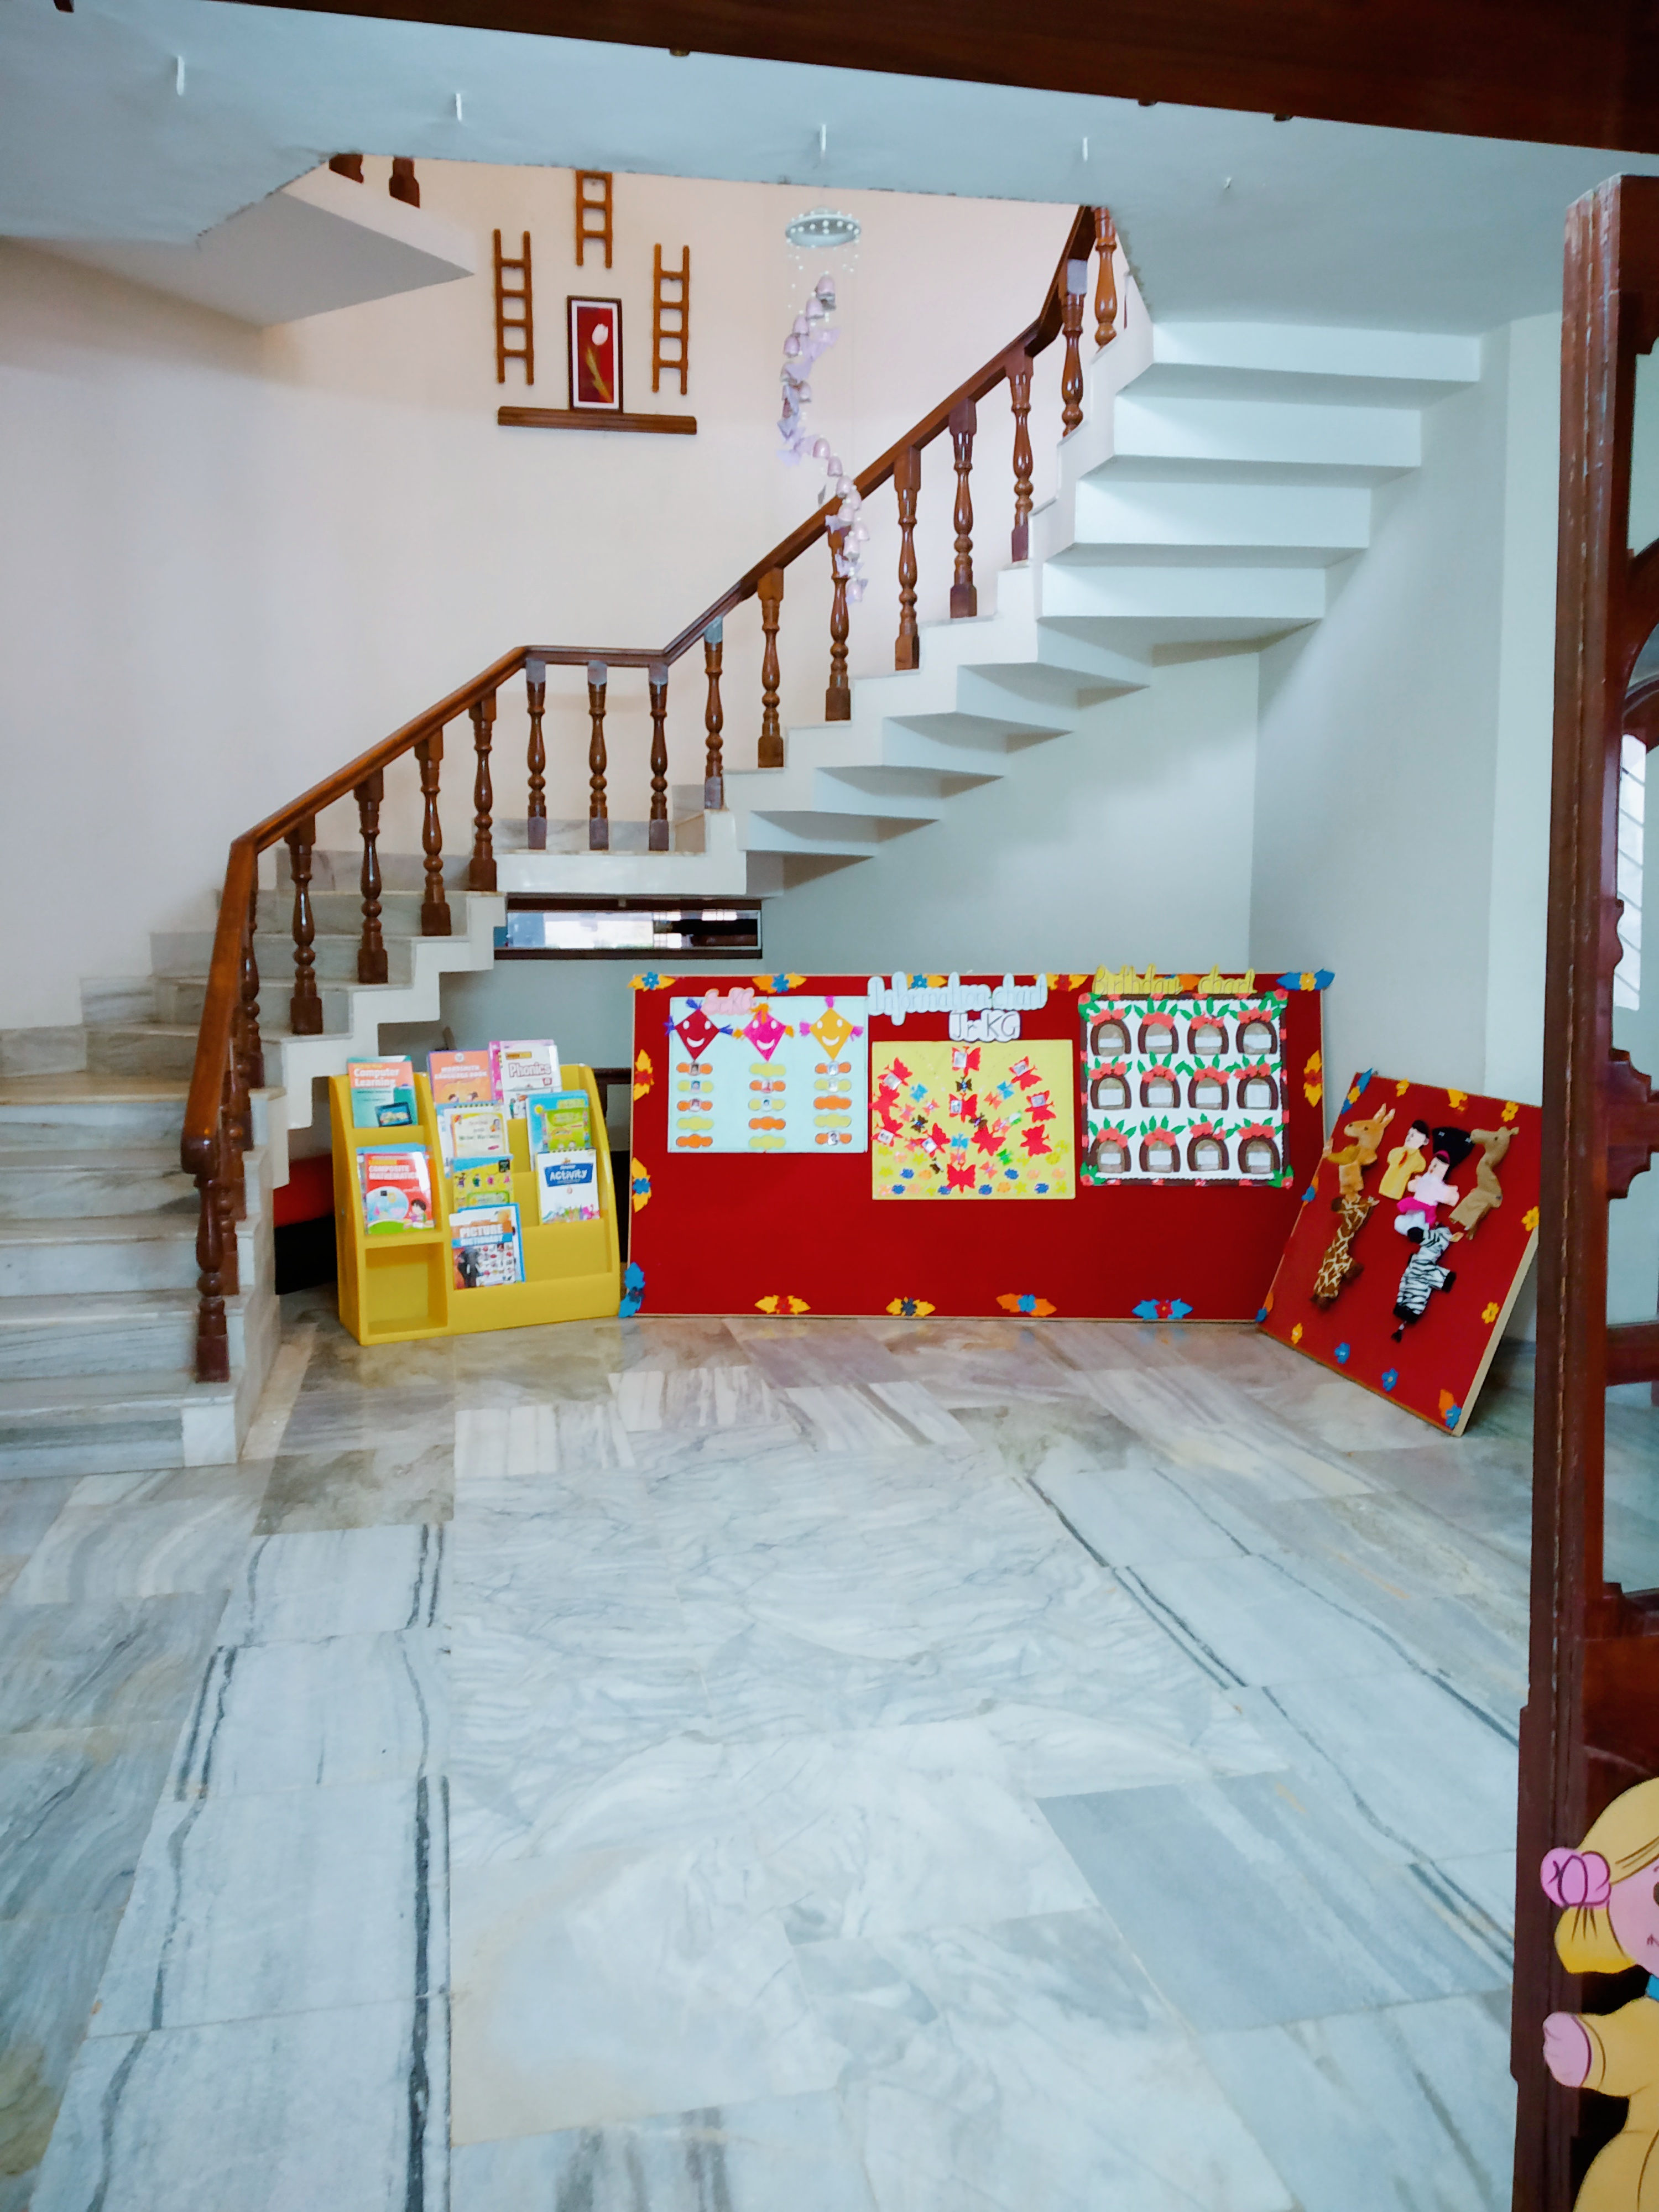 Nursery school in Rangoli Halla